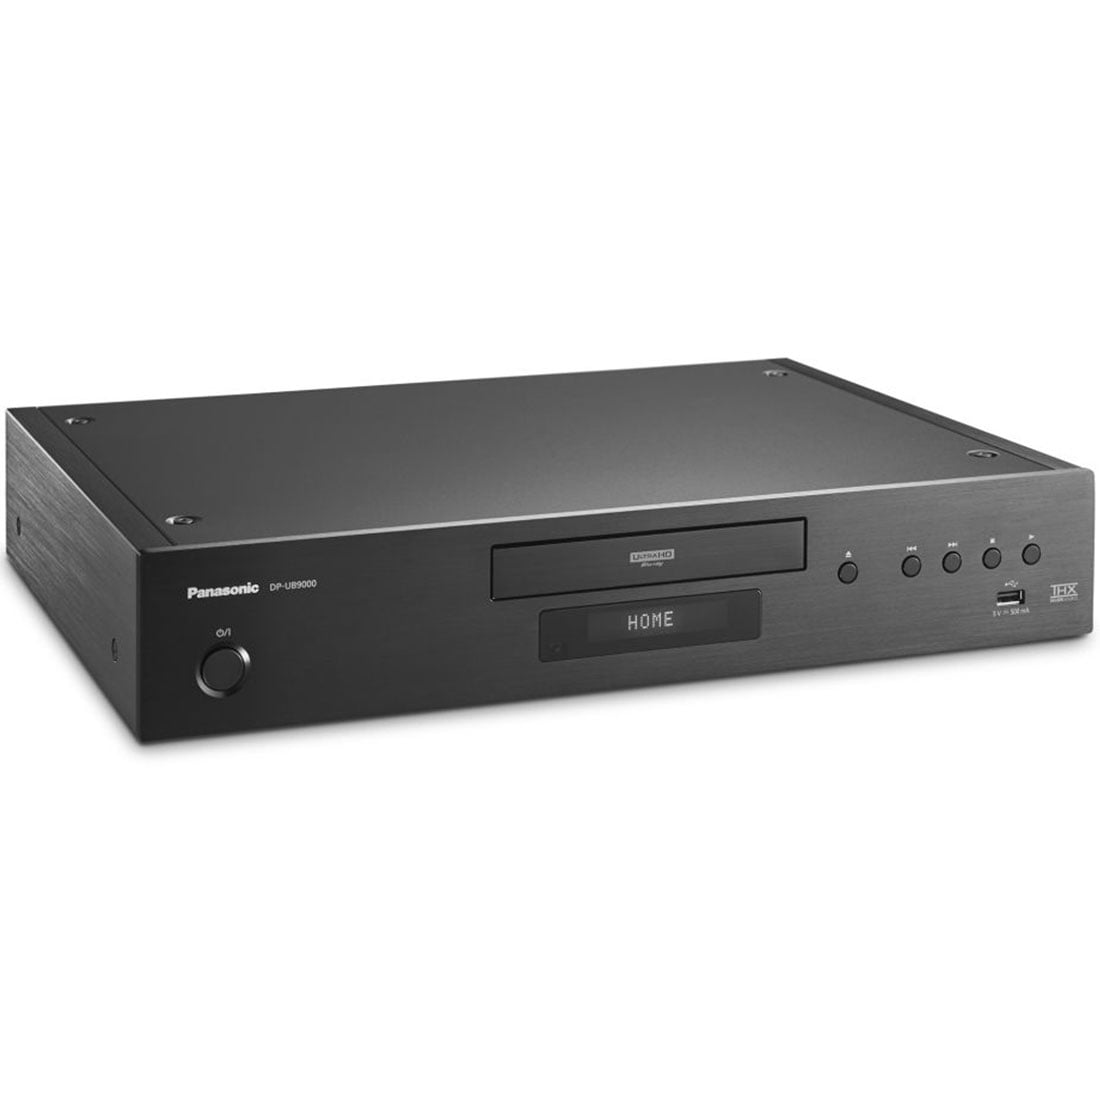 Panasonic DPUB9000 Disc™ 4K Ultra HD Blu-ray Player